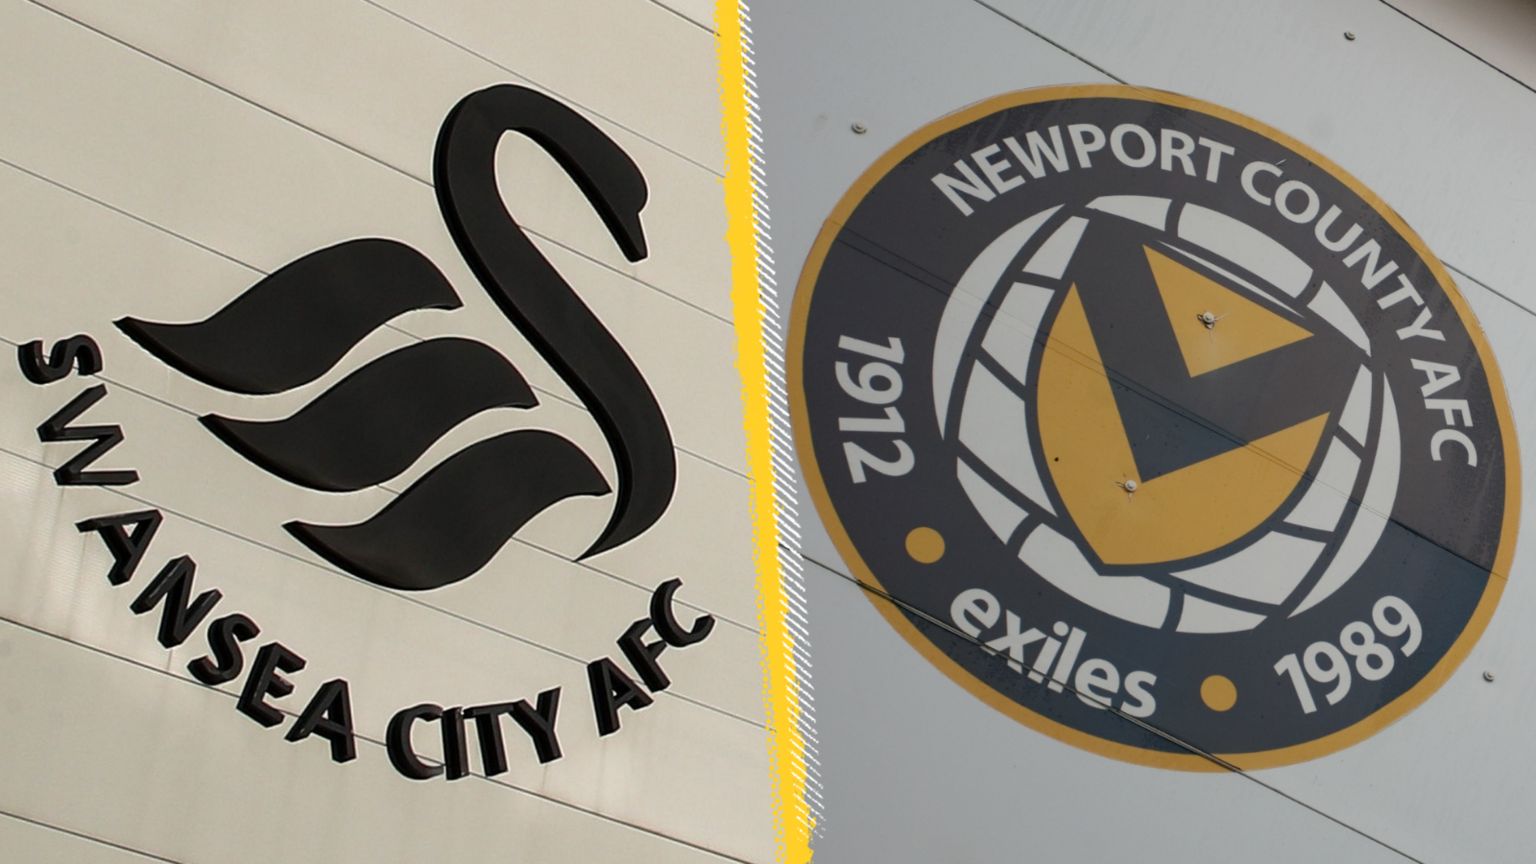 Swansea and Newport logos